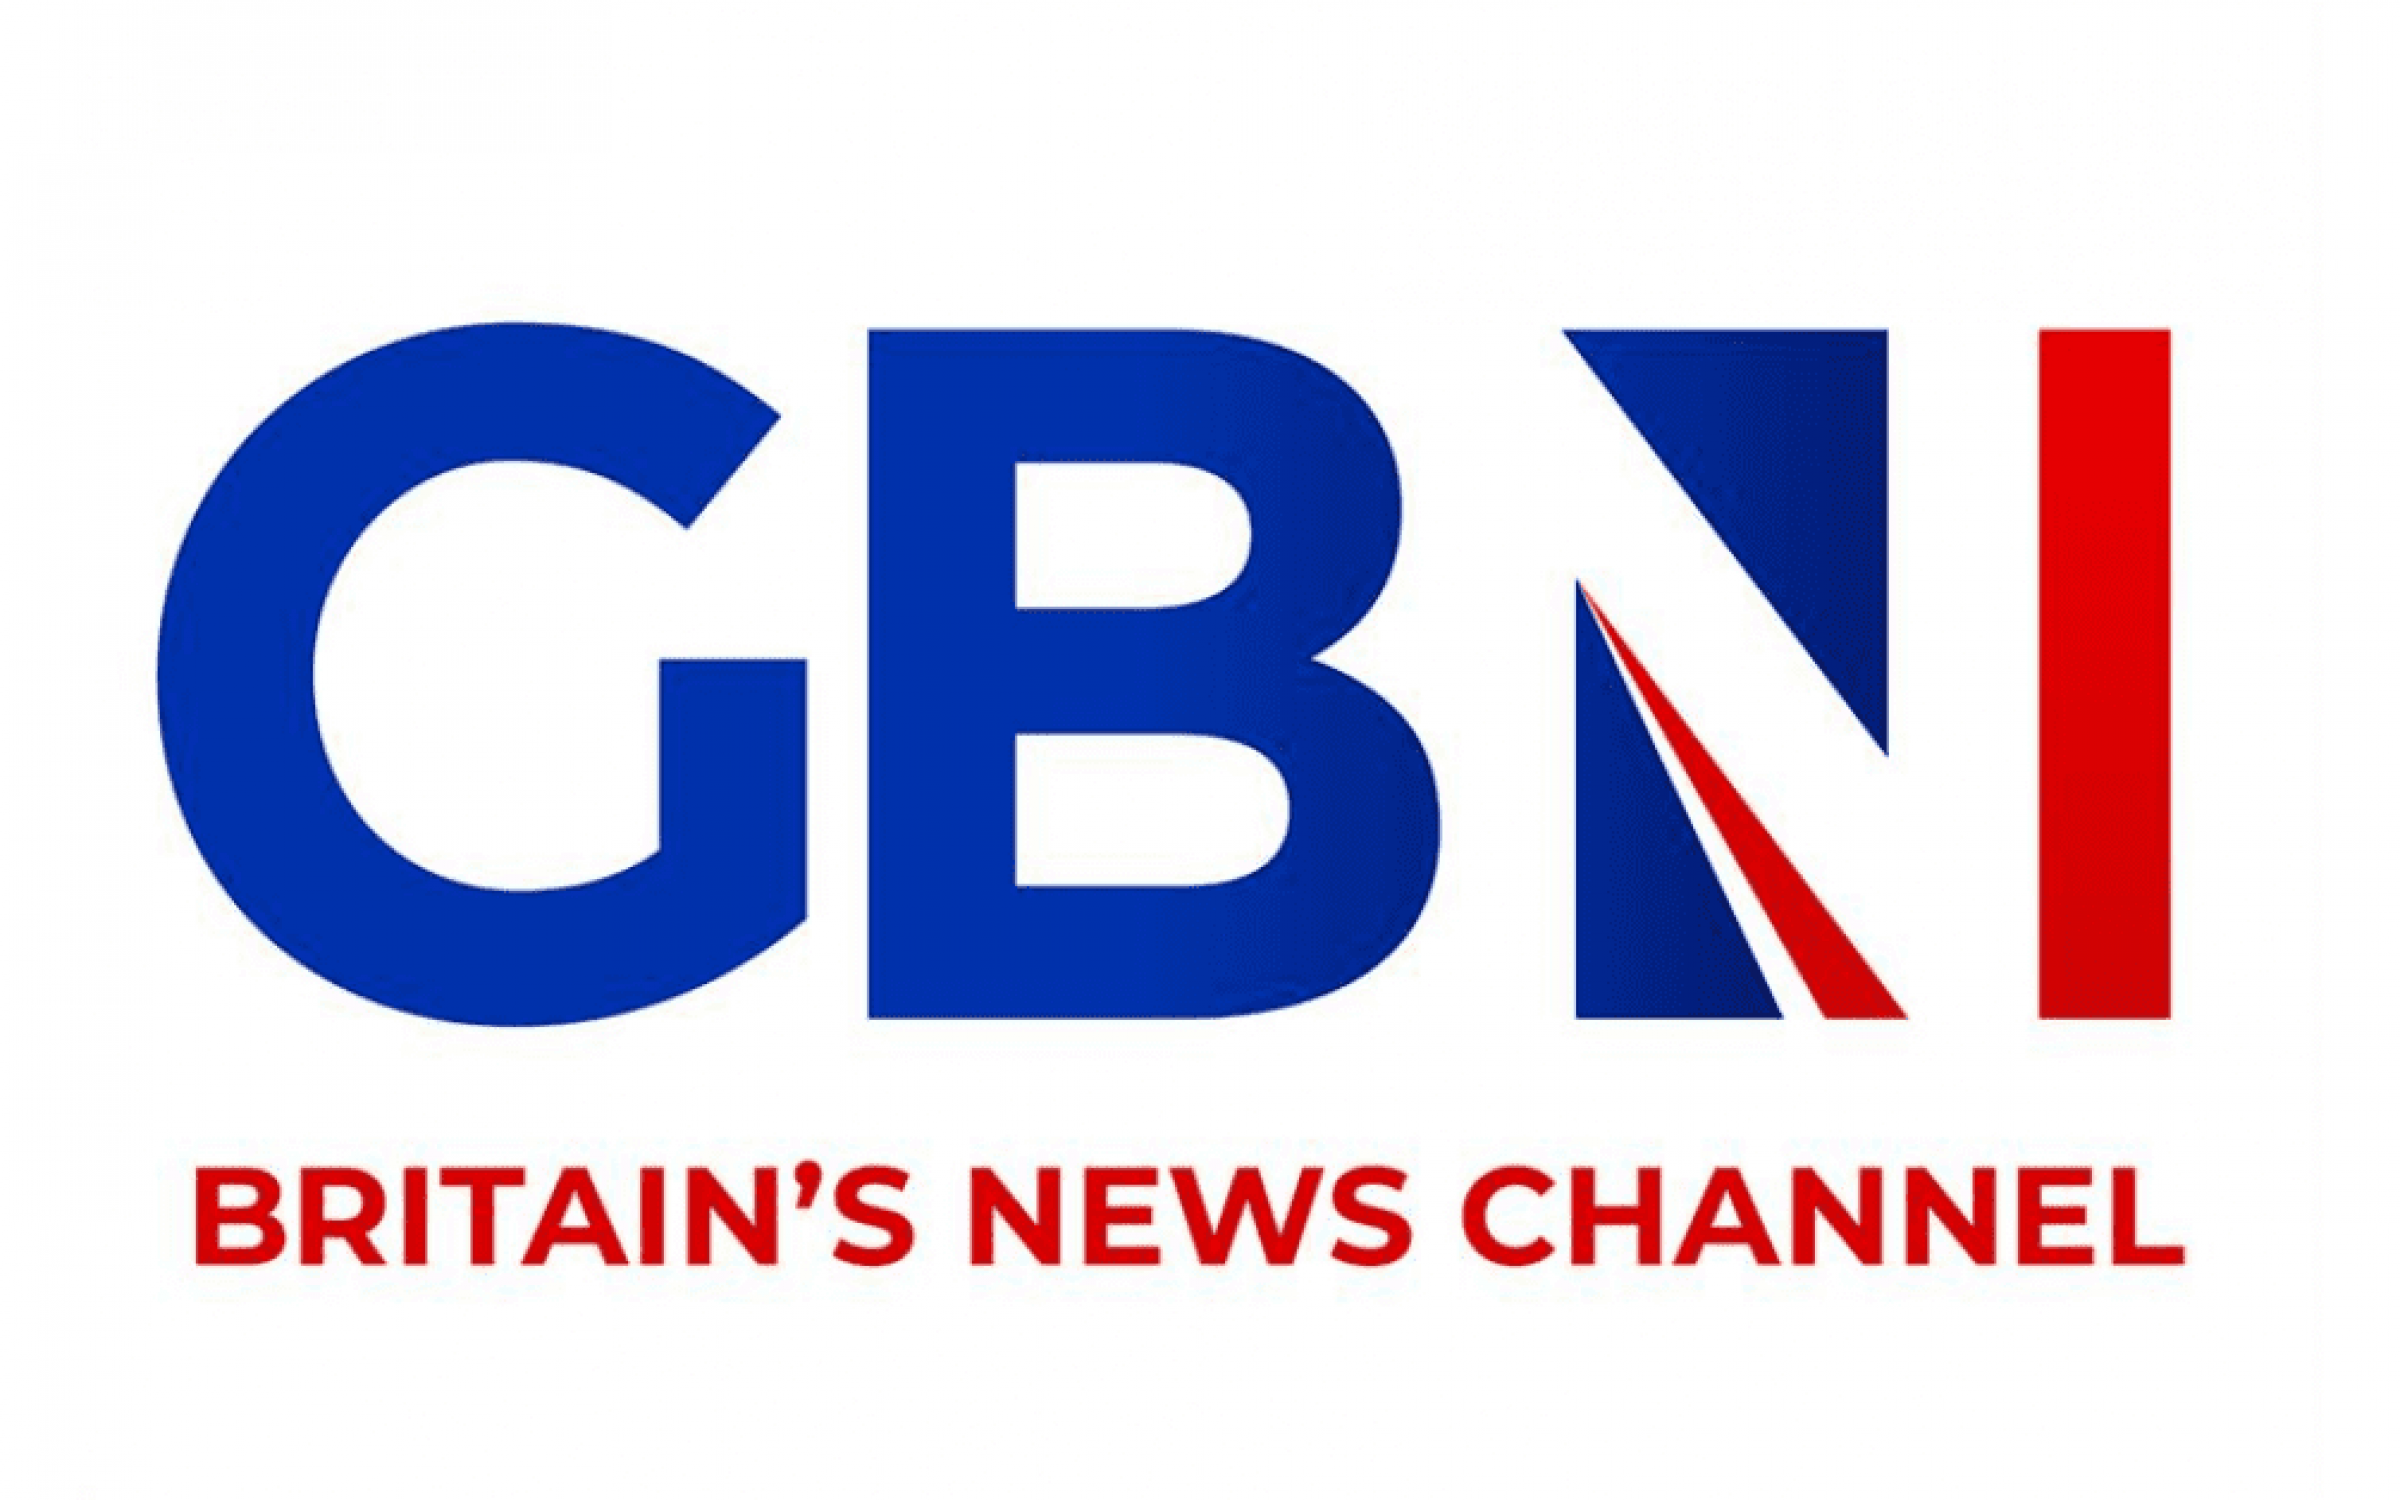 GB News logo